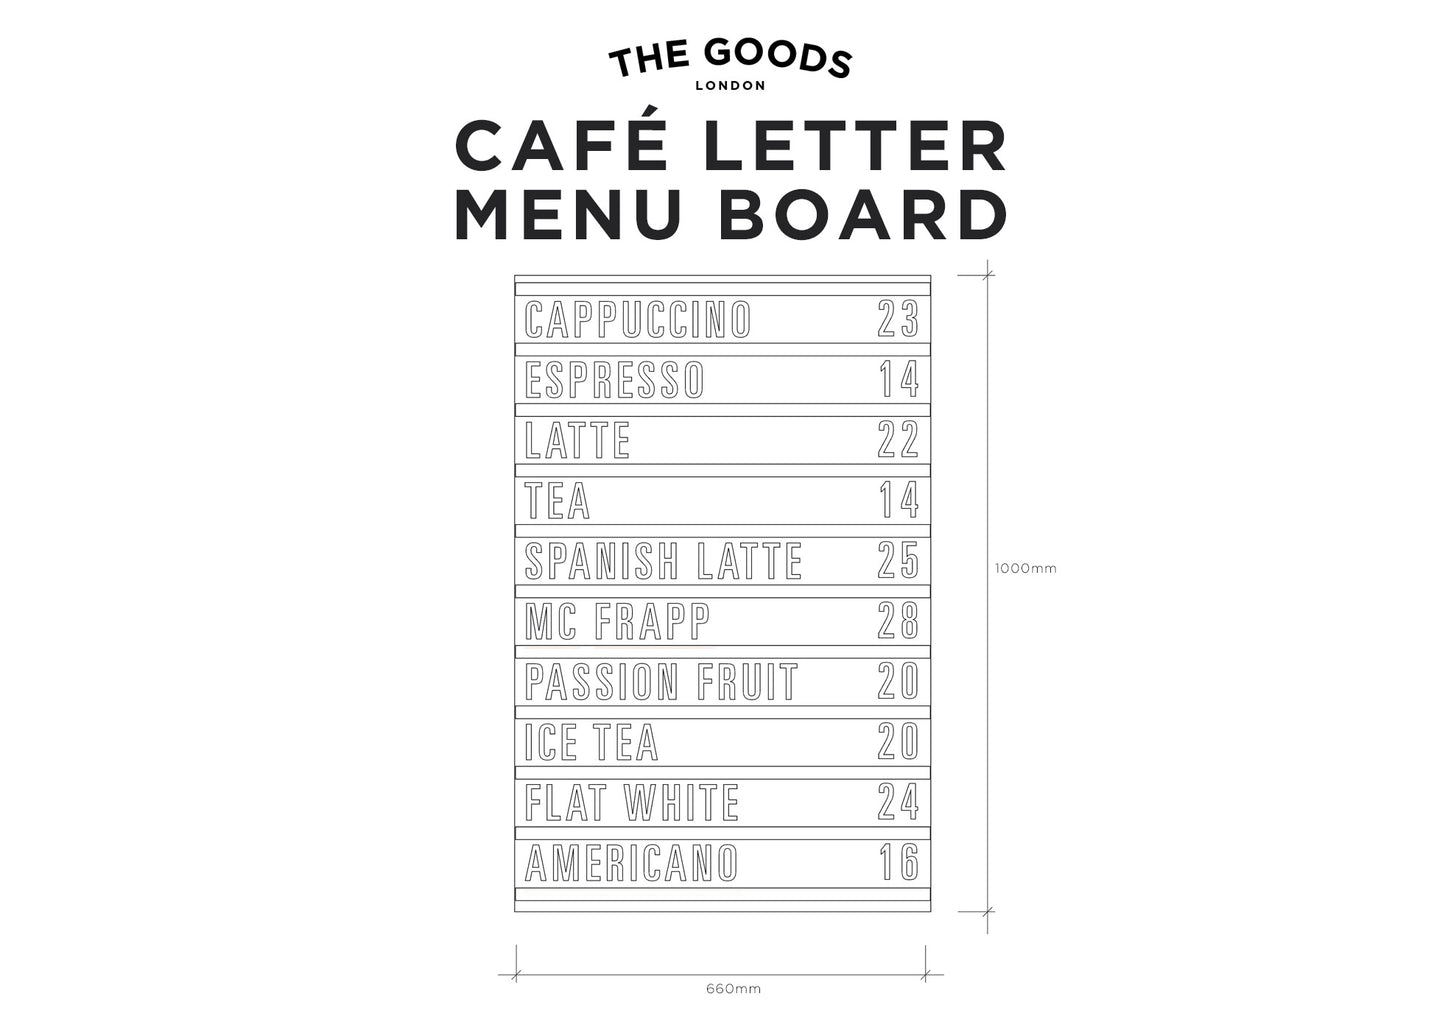 Café Letter Menu Board Technical Drawing